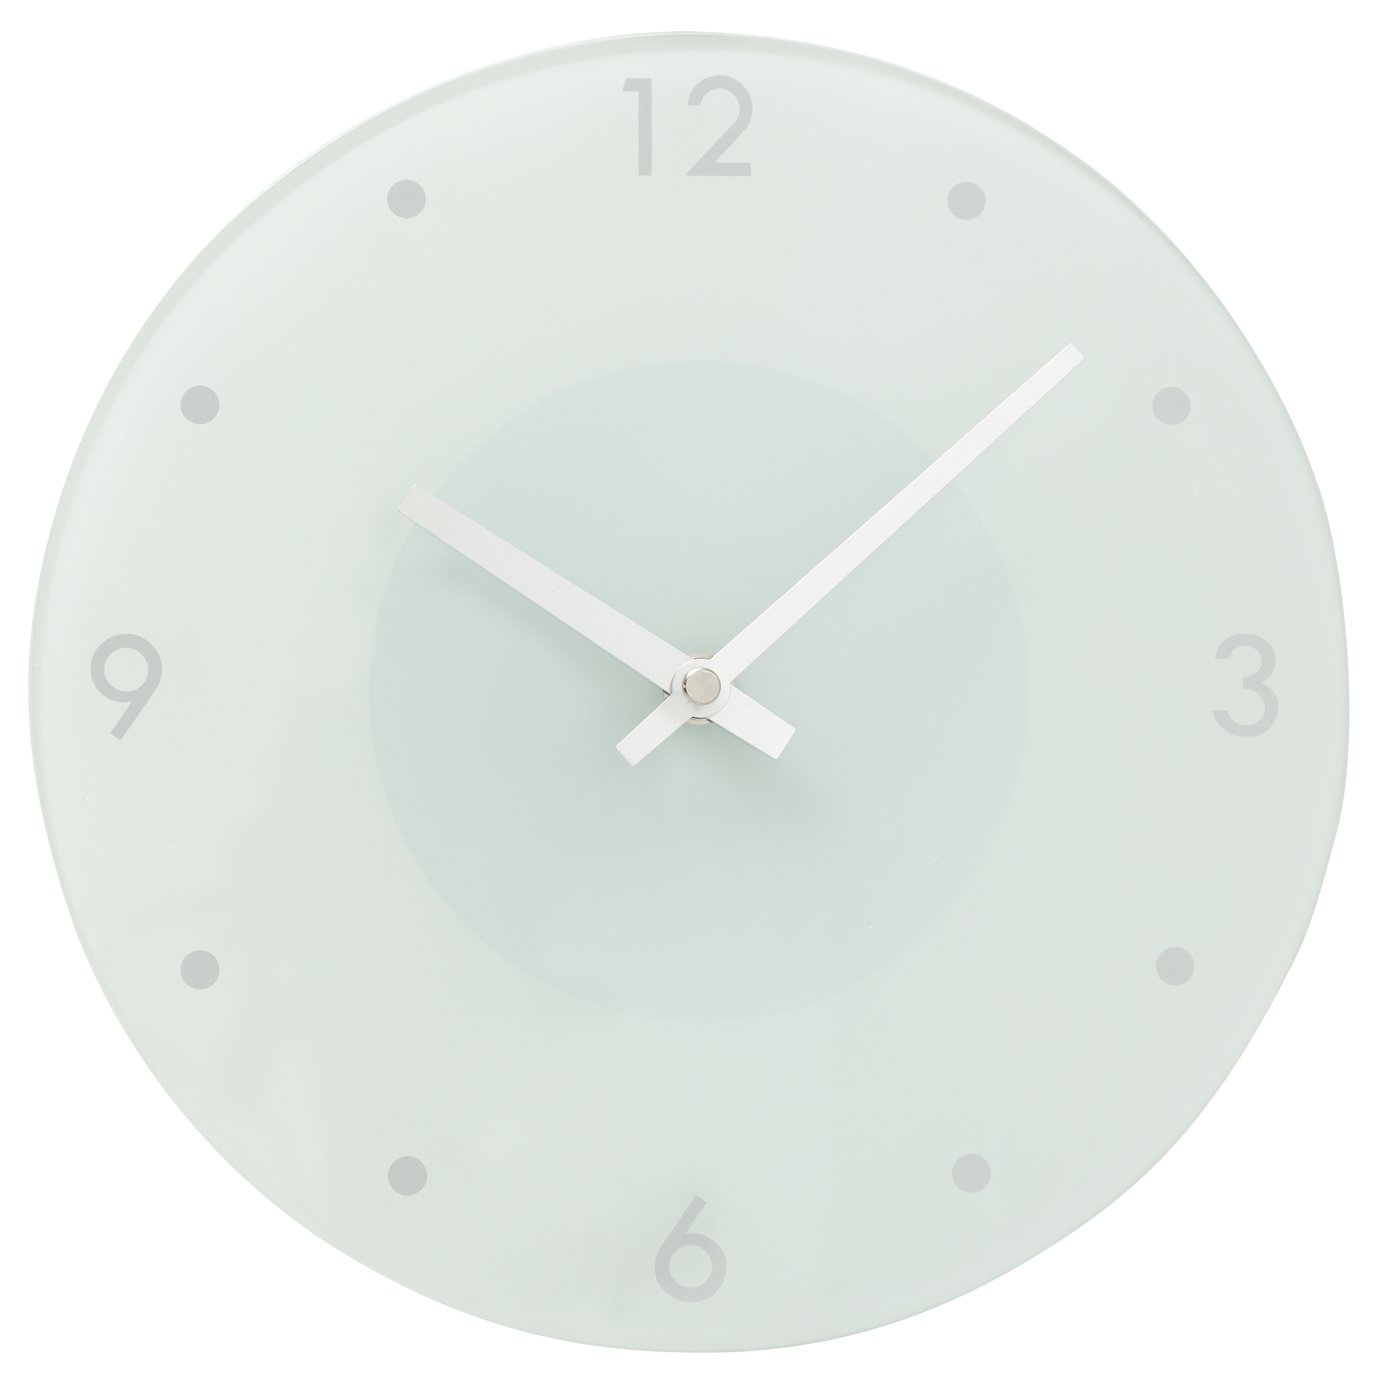 Argos Home Glass Wall Clock - White